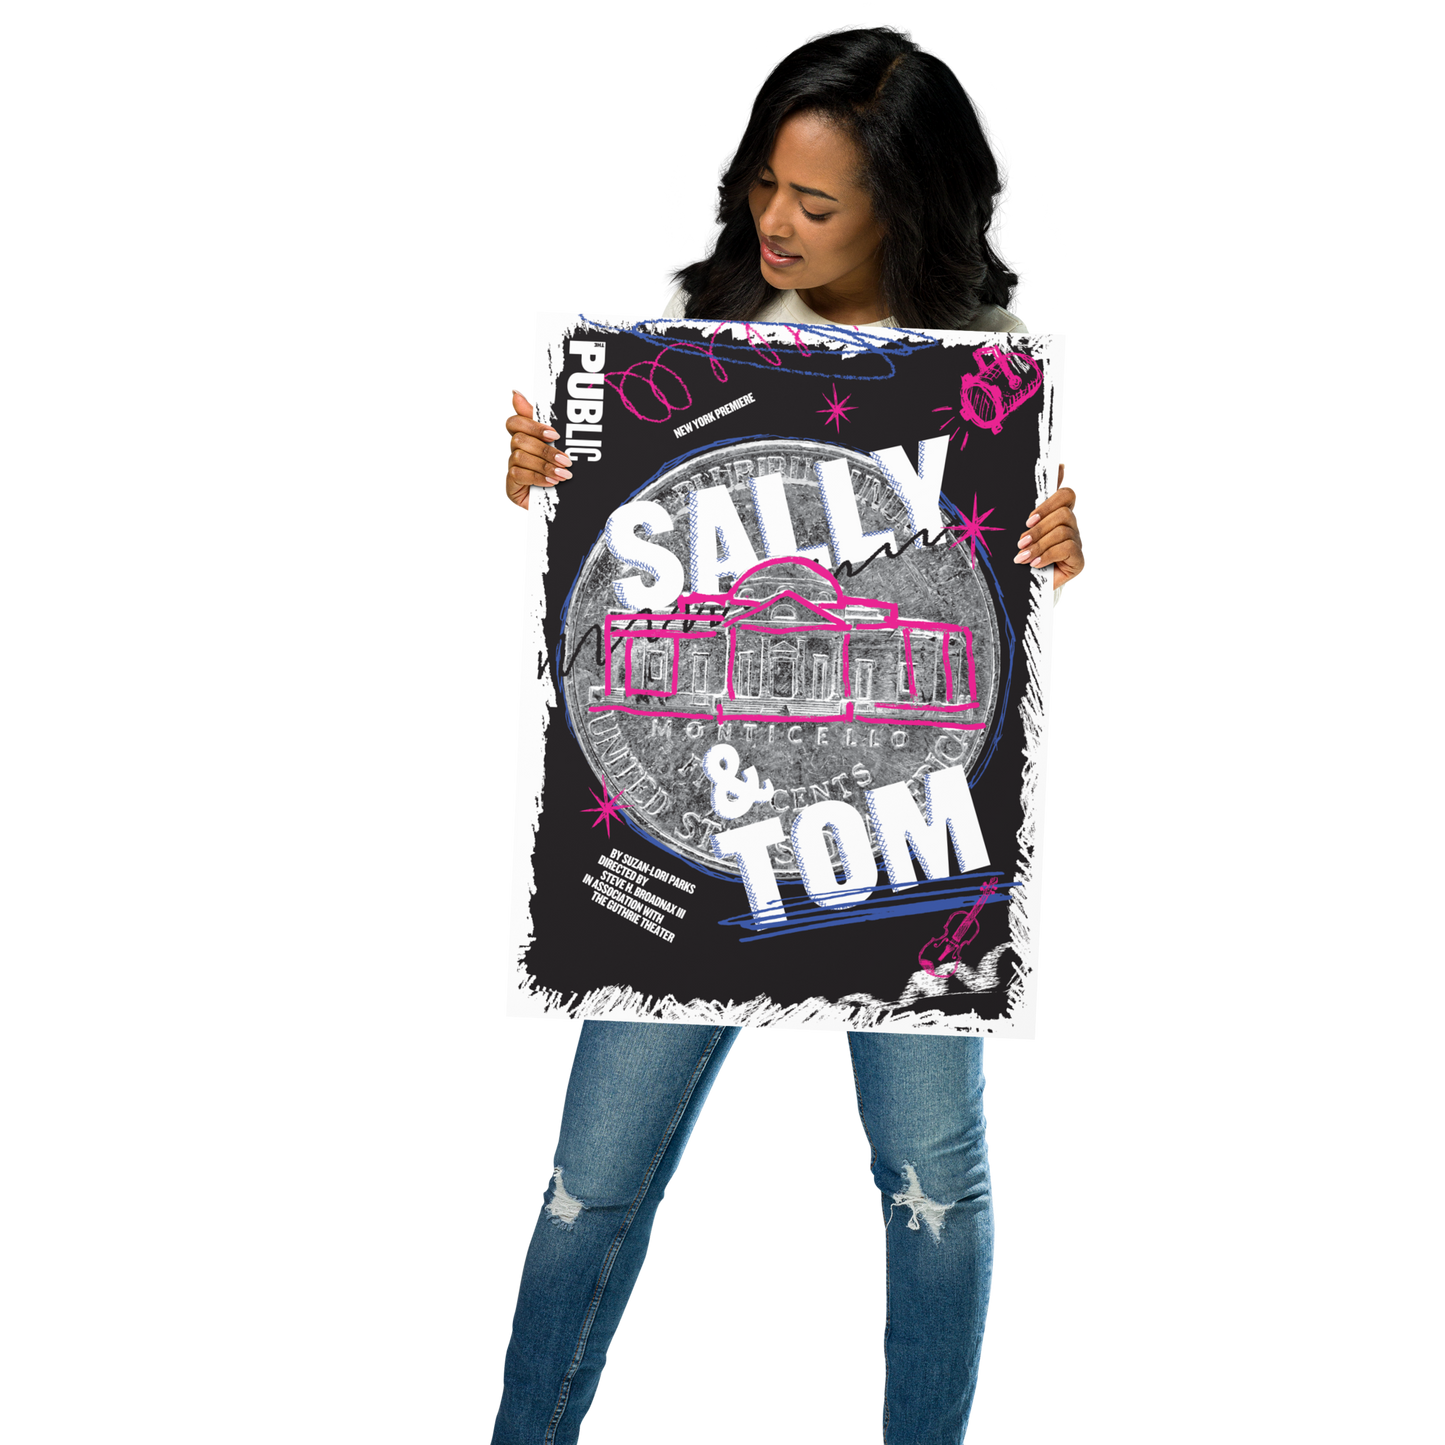 SALLY & TOM Poster